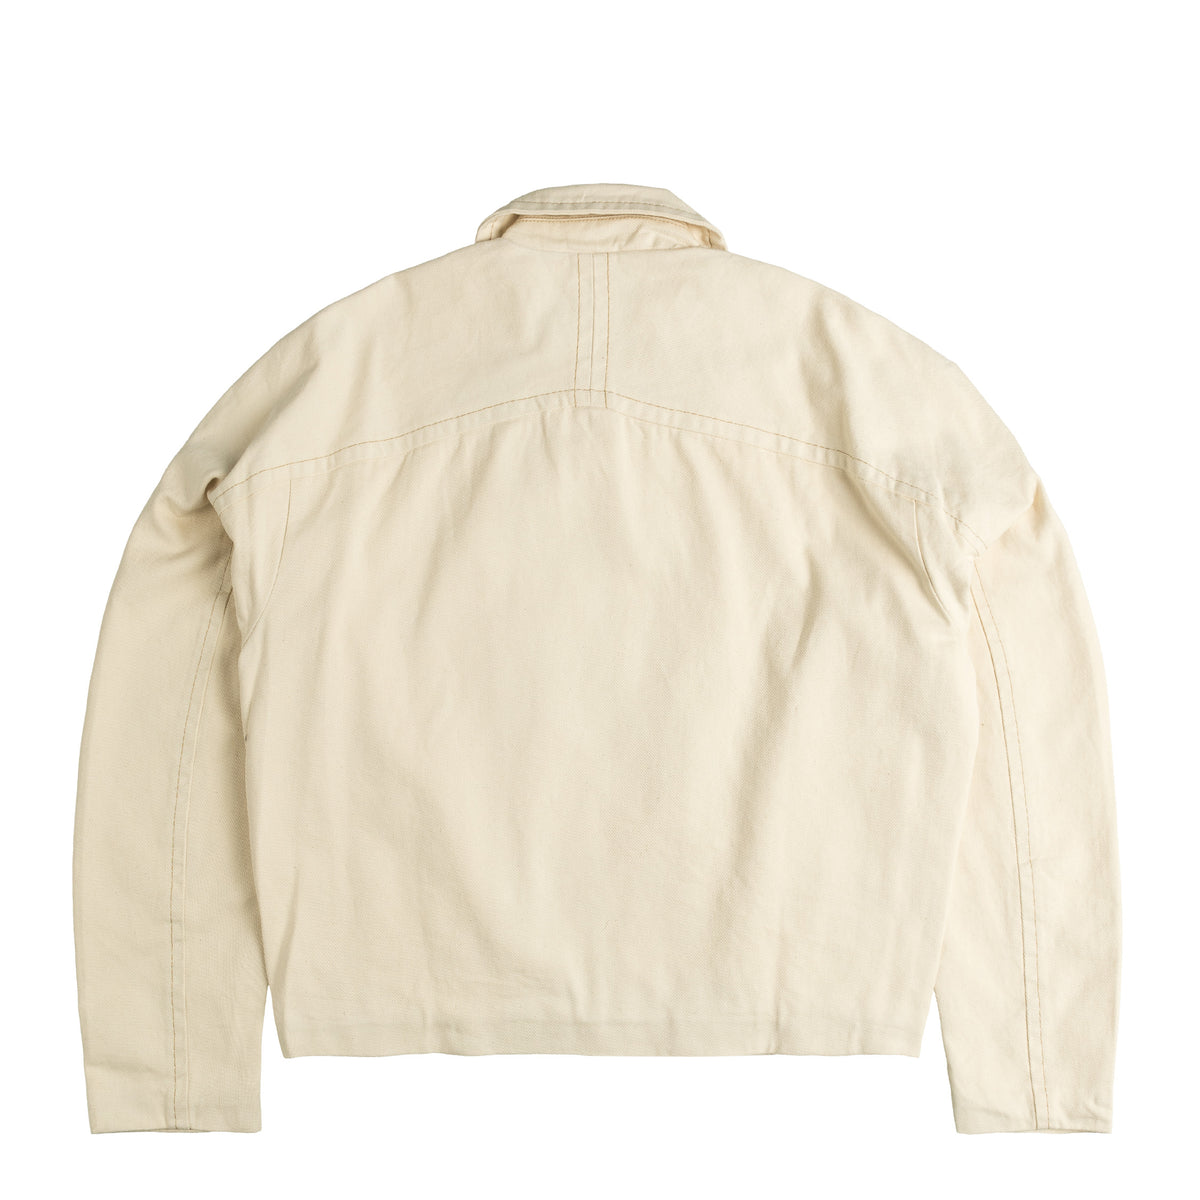 Perplex Workwear Jacket » Buy online now!